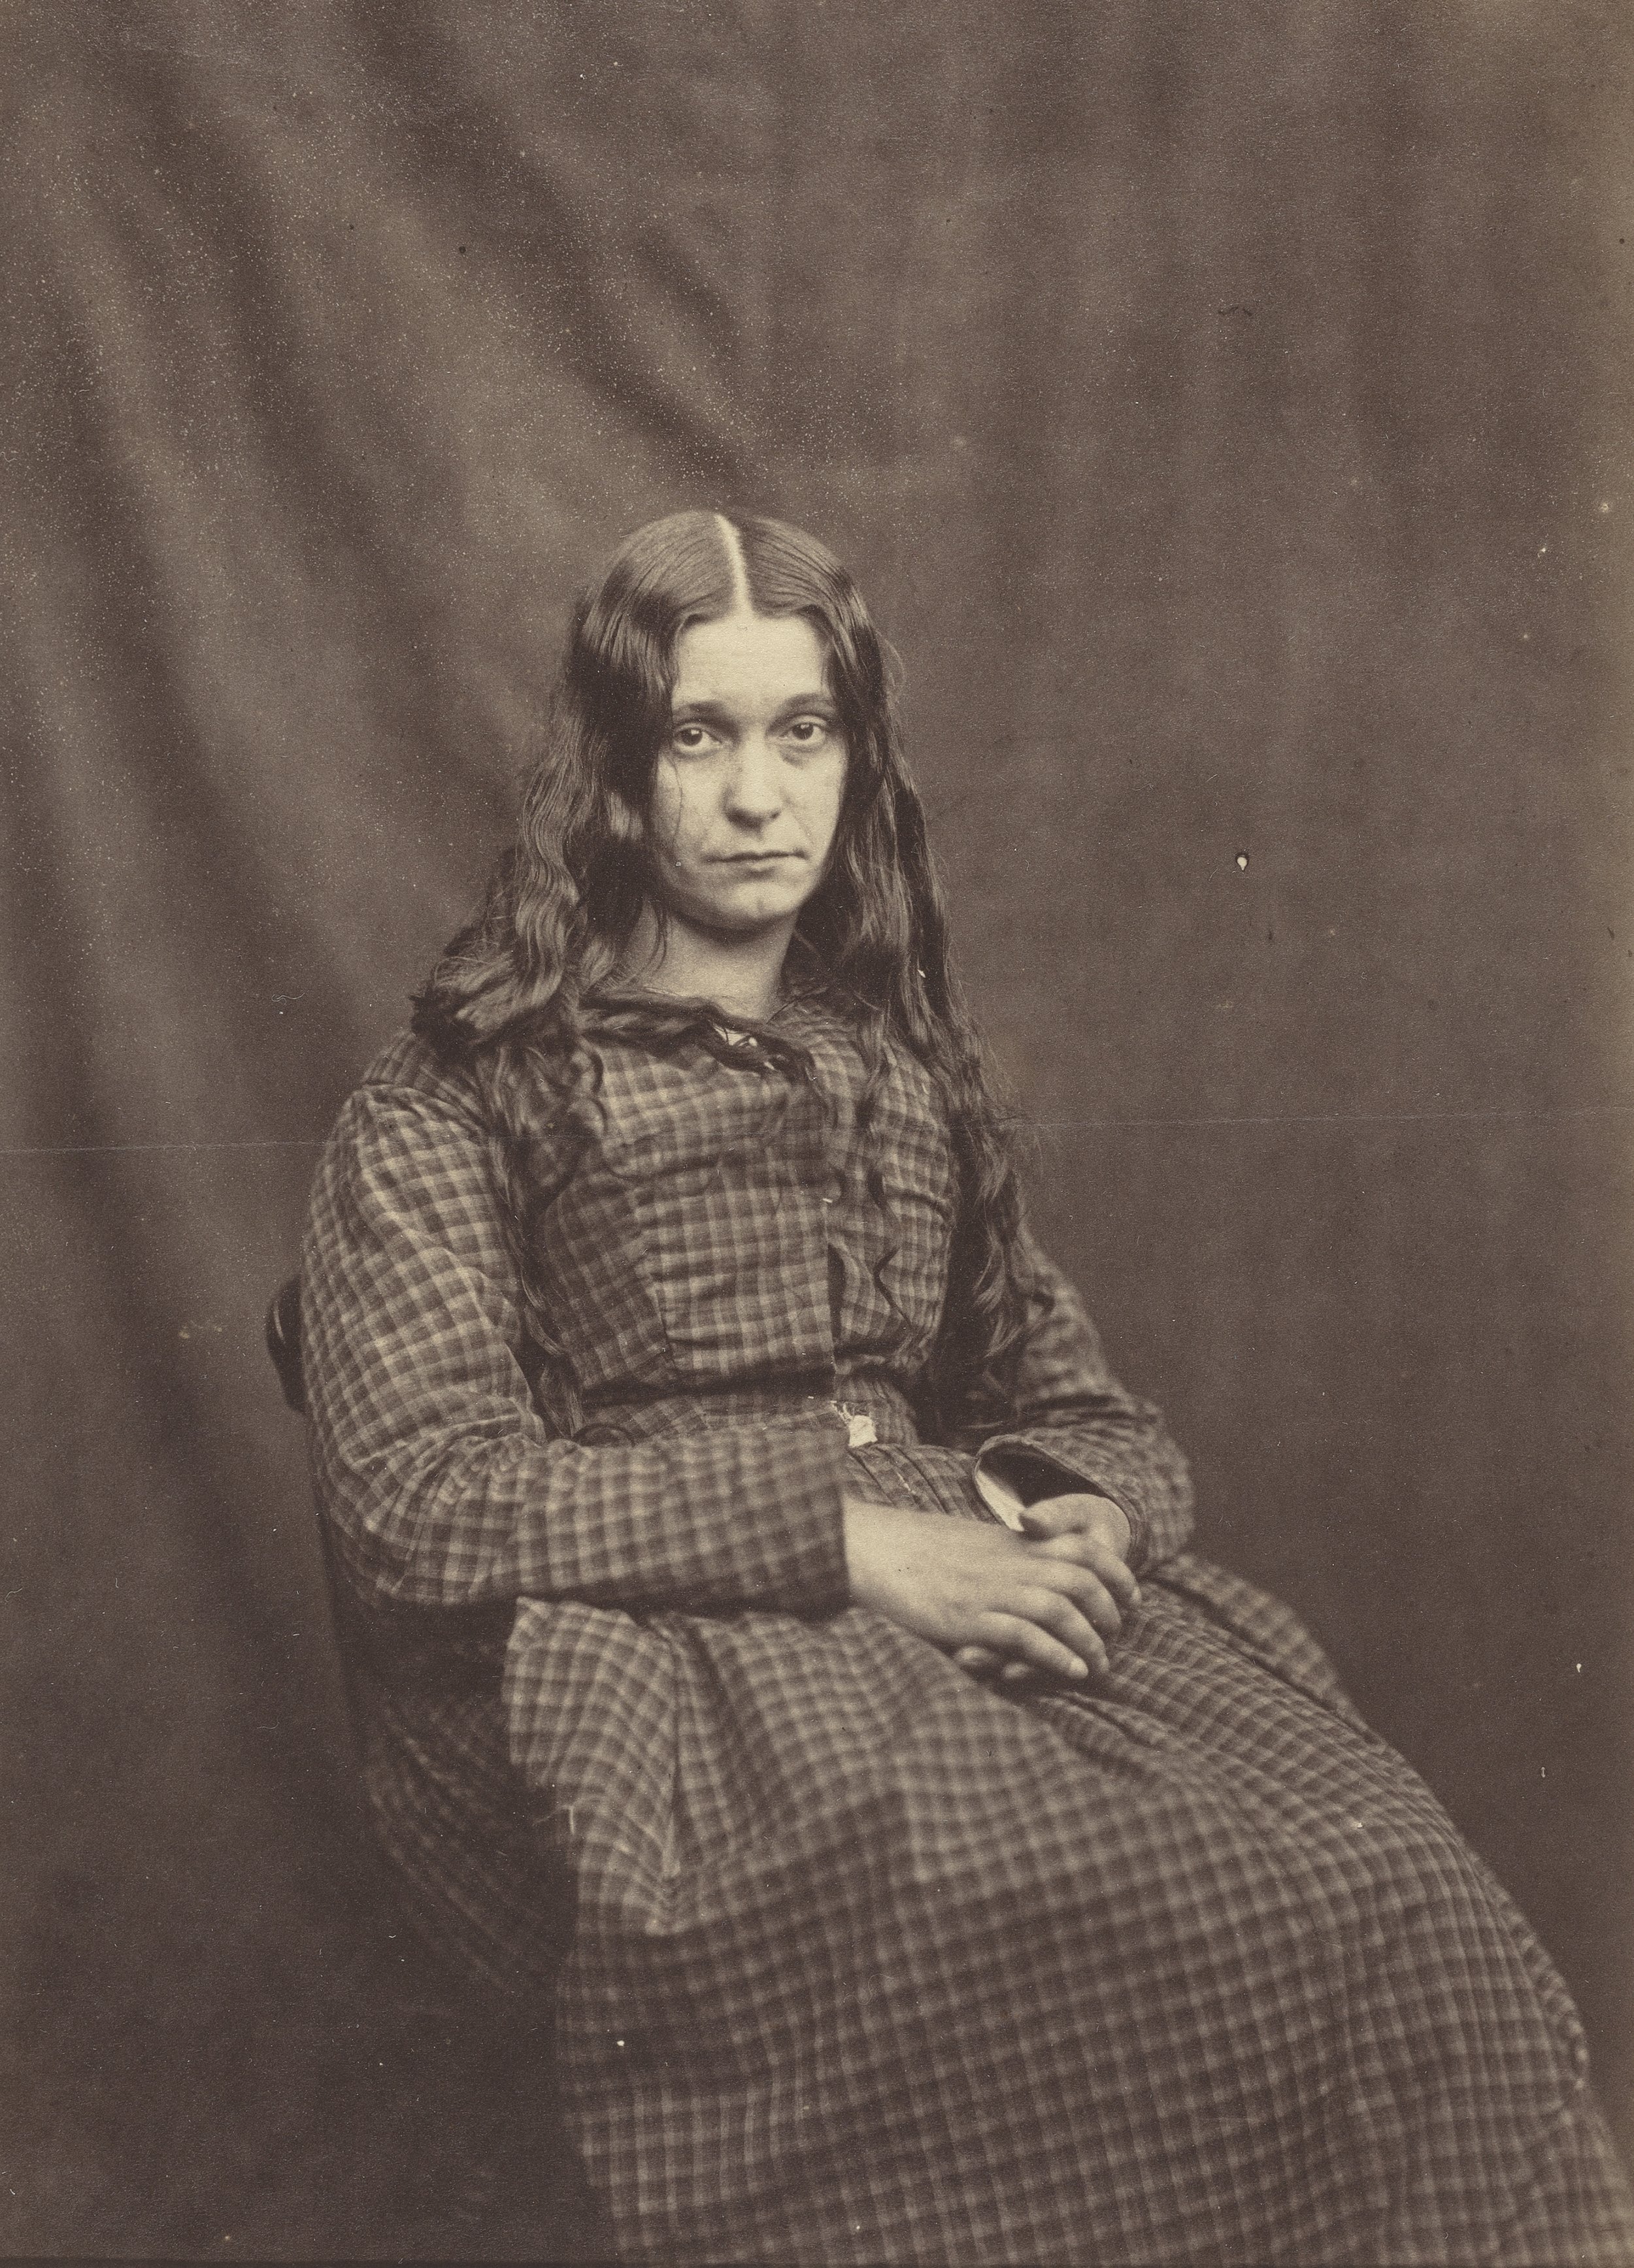 Dr._Hugh_Welch_Diamond,_Woman,_Surrey_County_Asylum,_c._1855,_NGA_137734.jpg